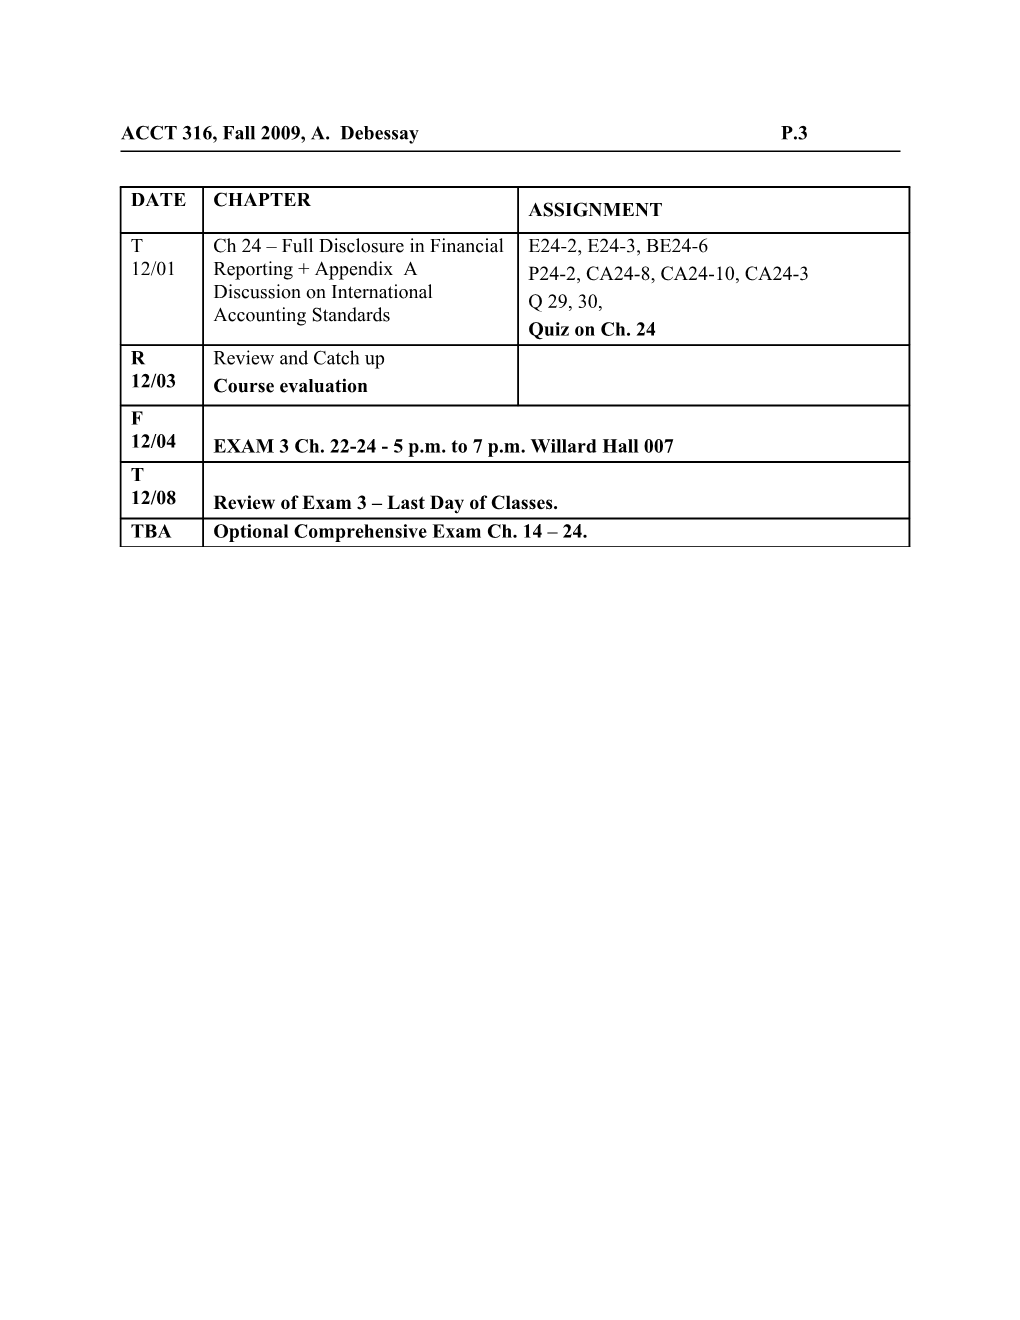 2009 Fall - A. Debessay, Assignment Schedule